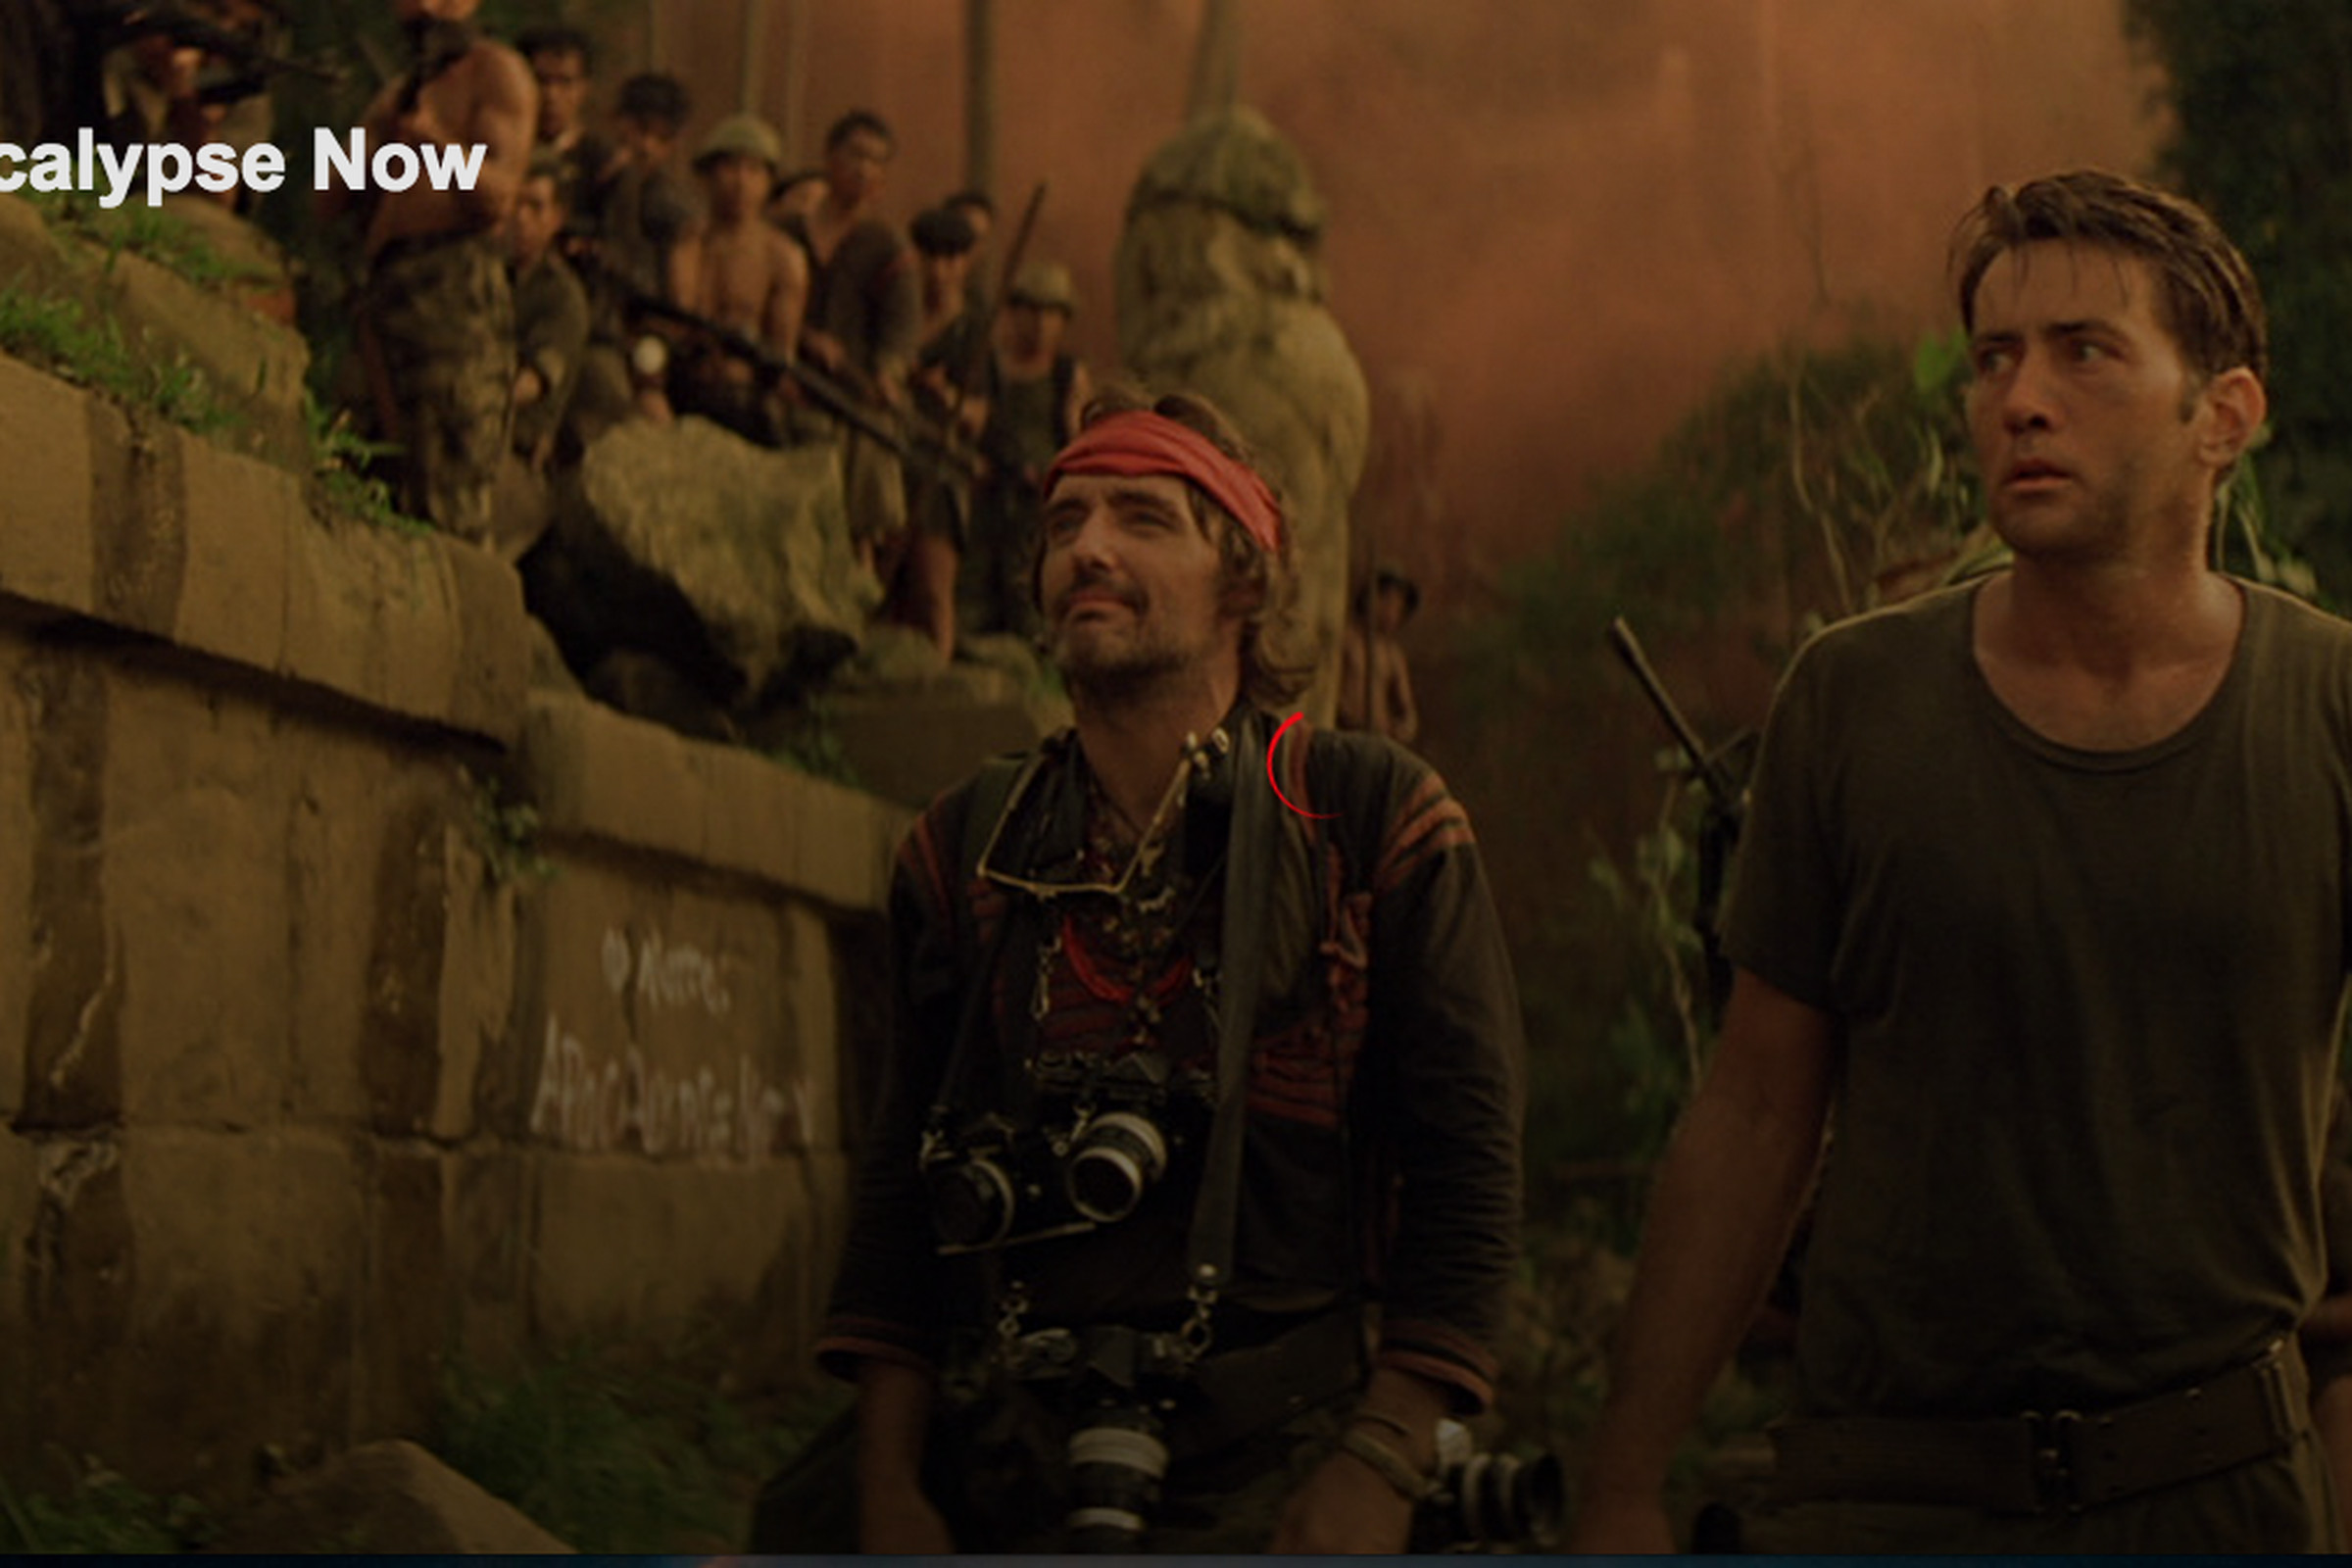 Scene from 'Apocalypse Now' on Netflix